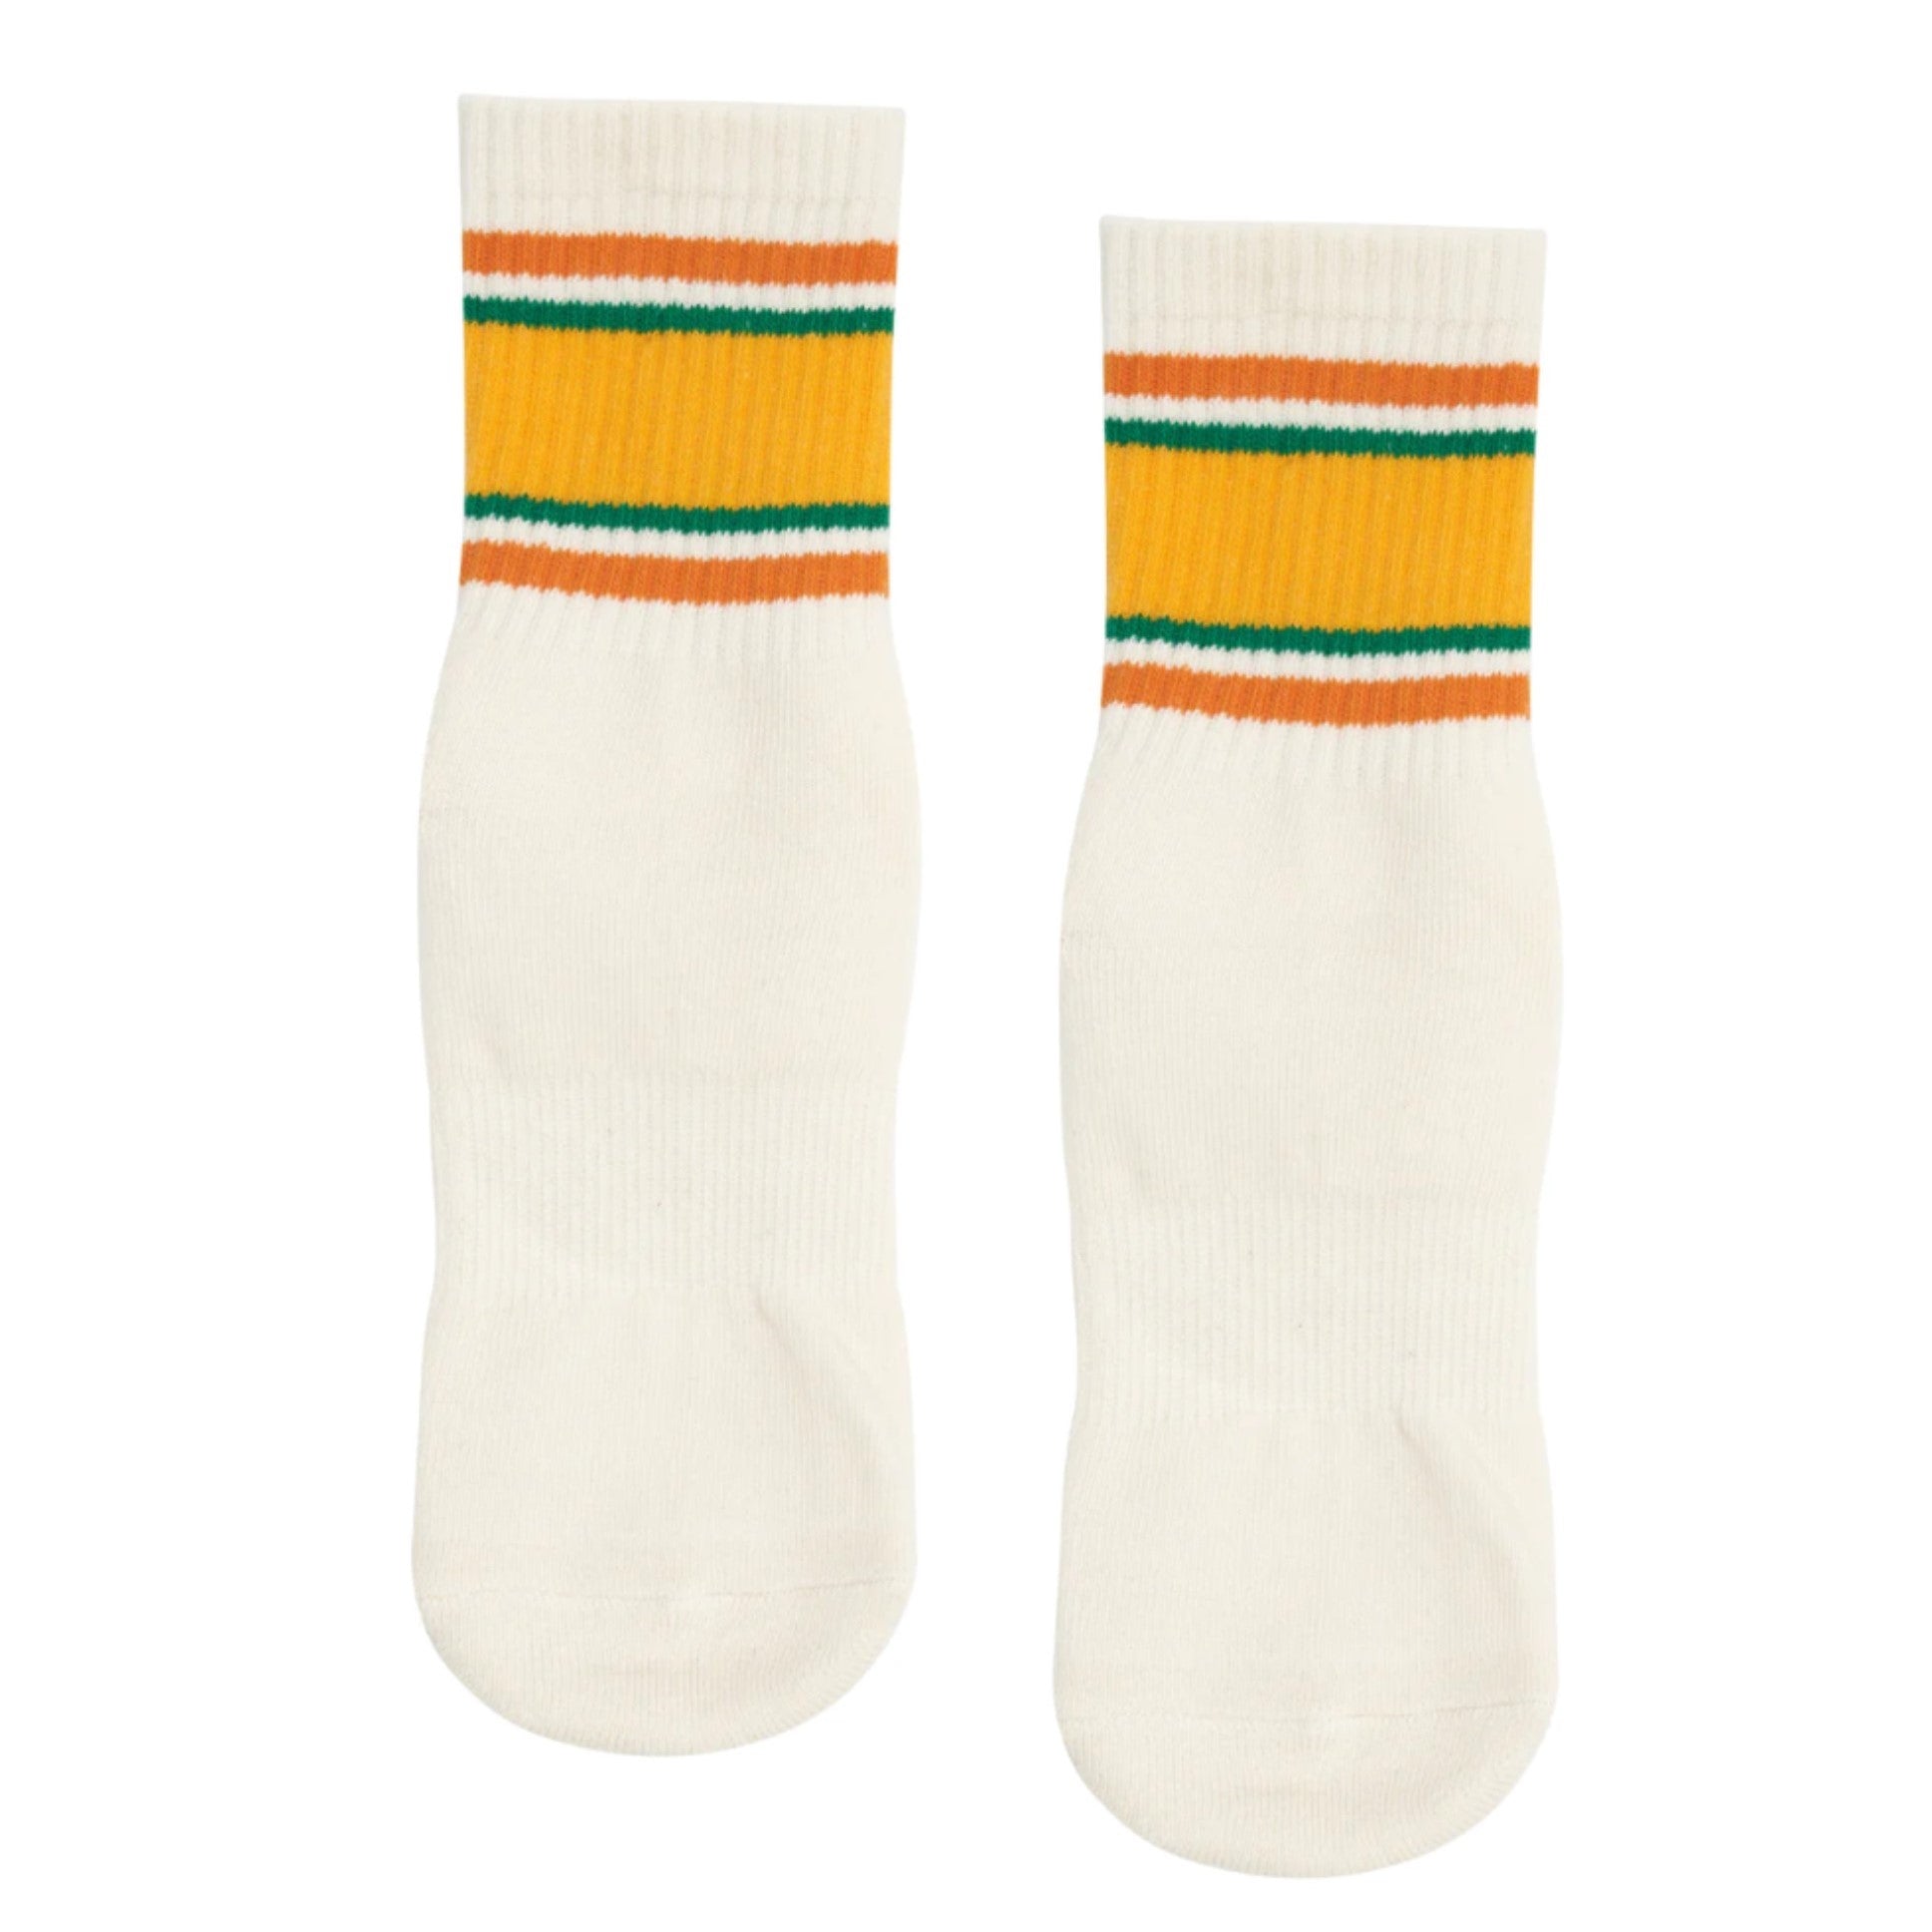 Pretzel Crew Grip Socks - simplyWORKOUT Black / One Size (6-10)